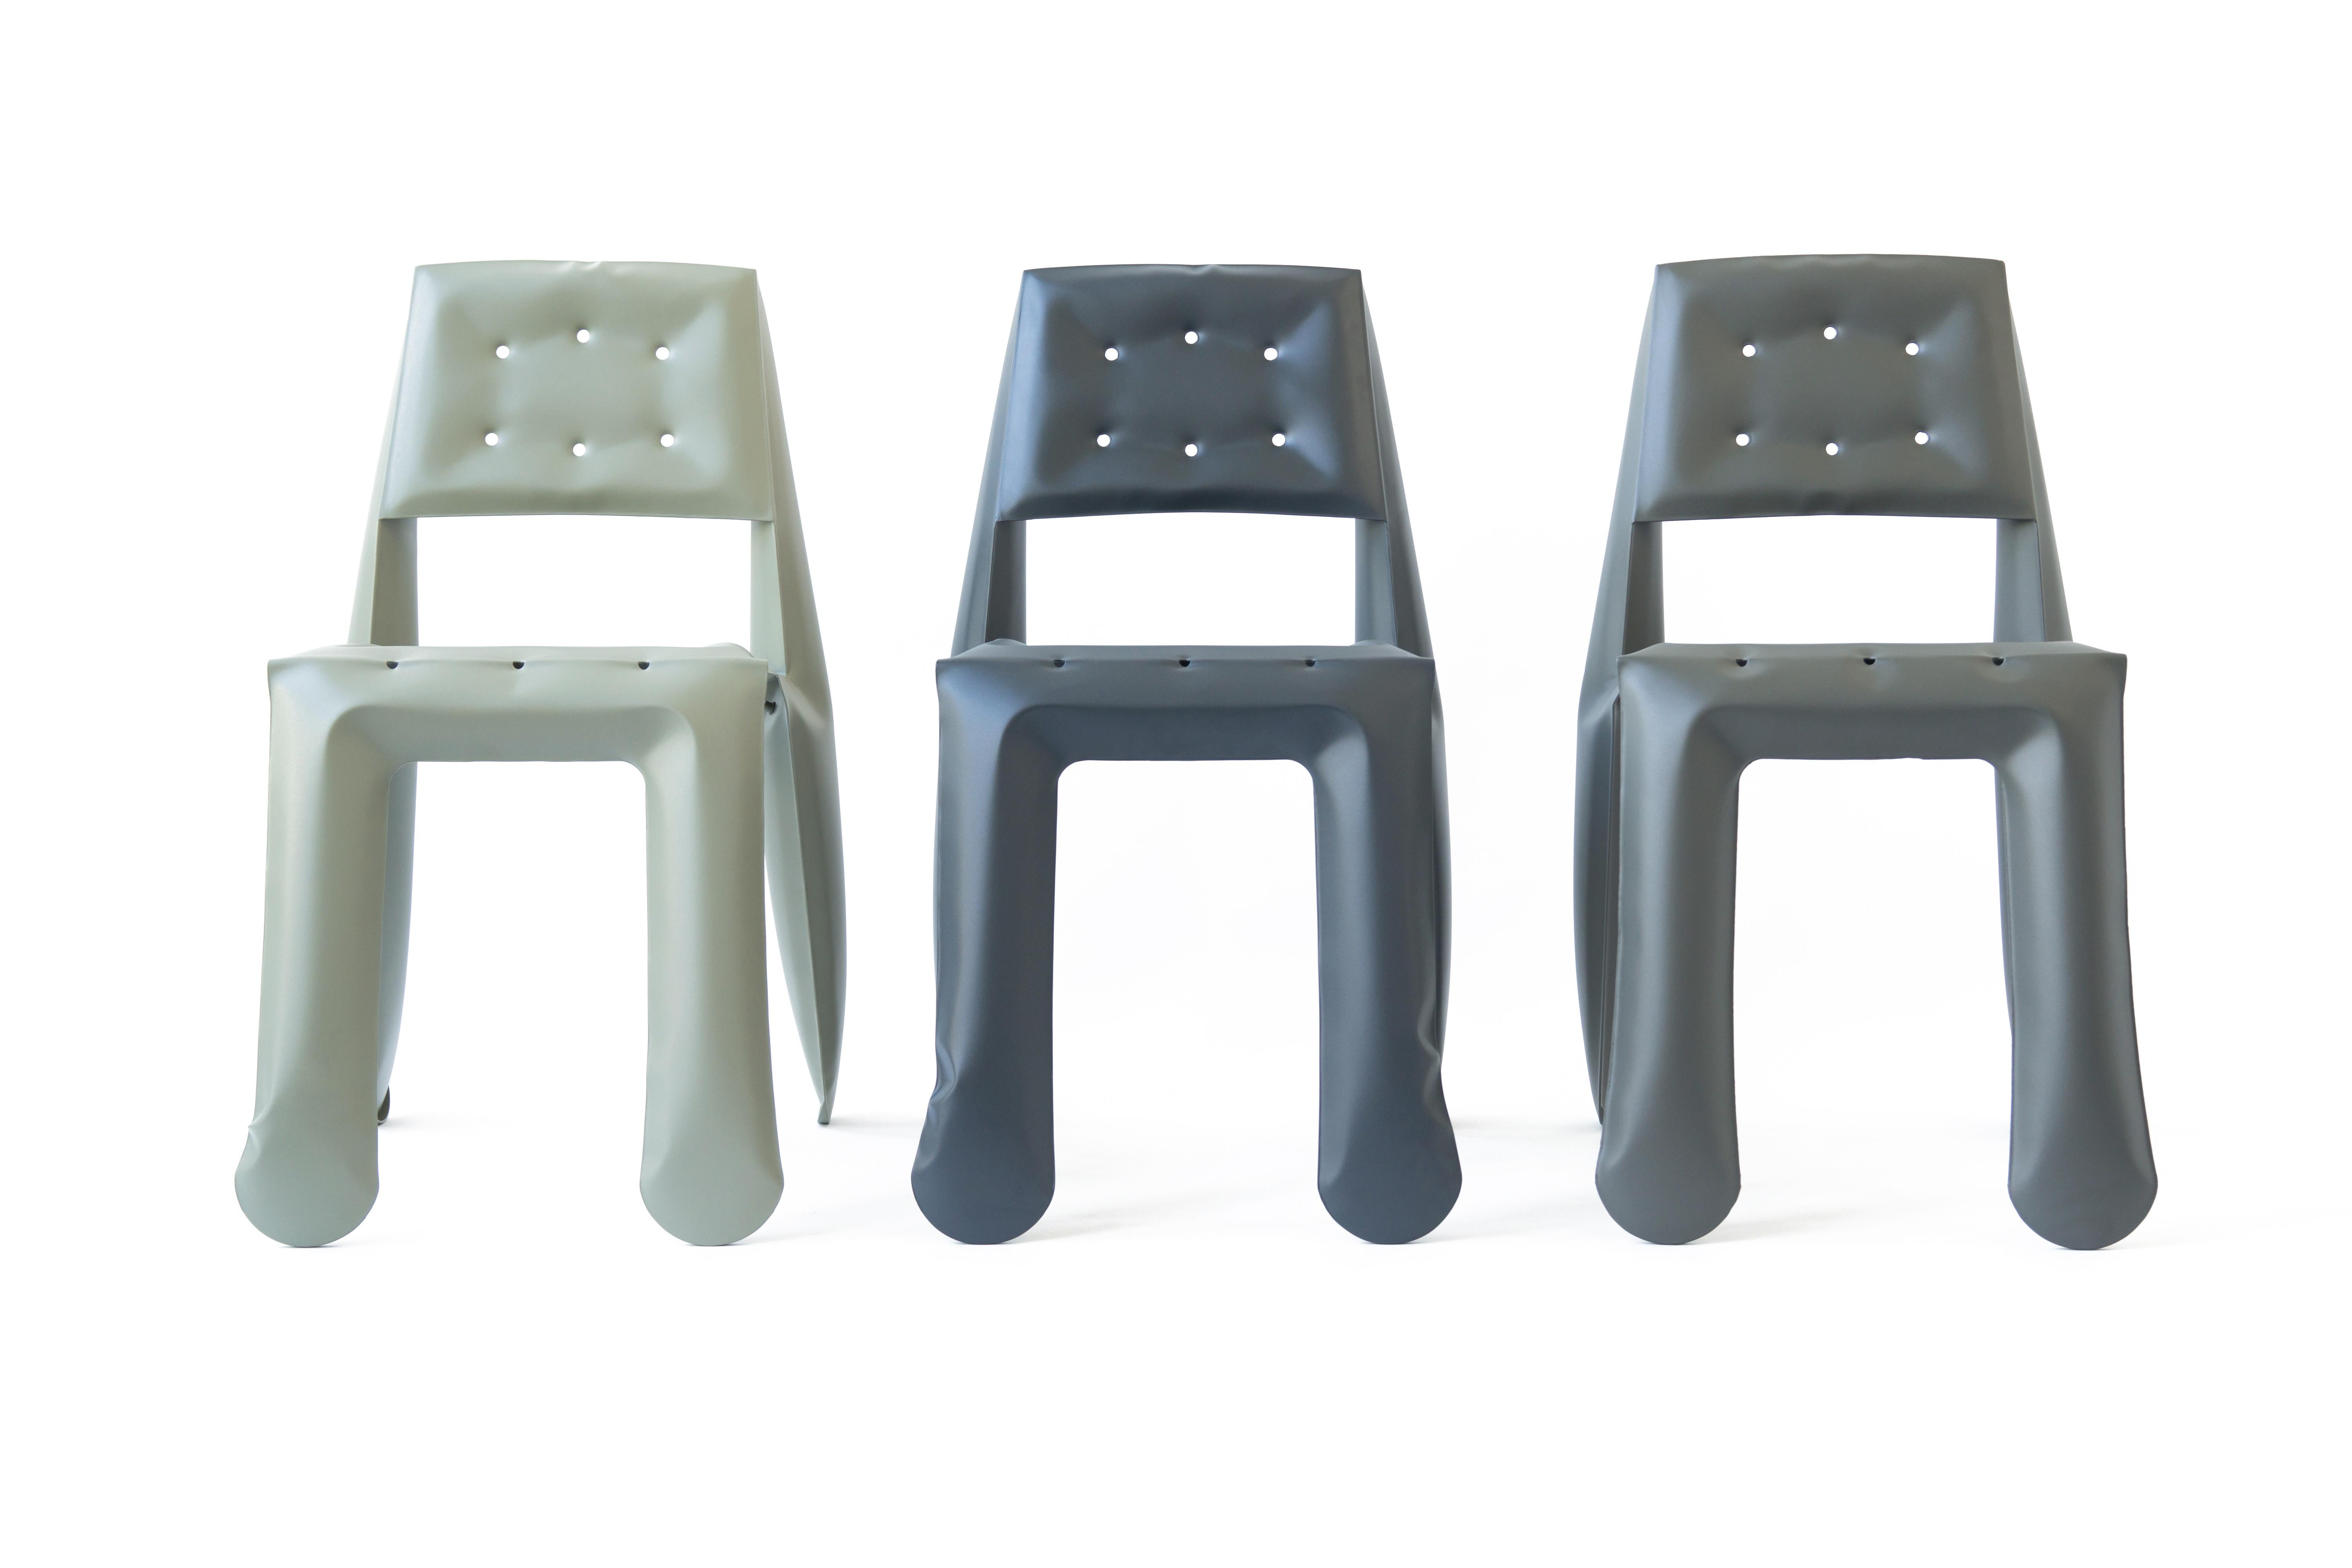 Powder-Coated Black Carbon Steel Chippensteel 0.5 Sculptural Chair by Zieta For Sale